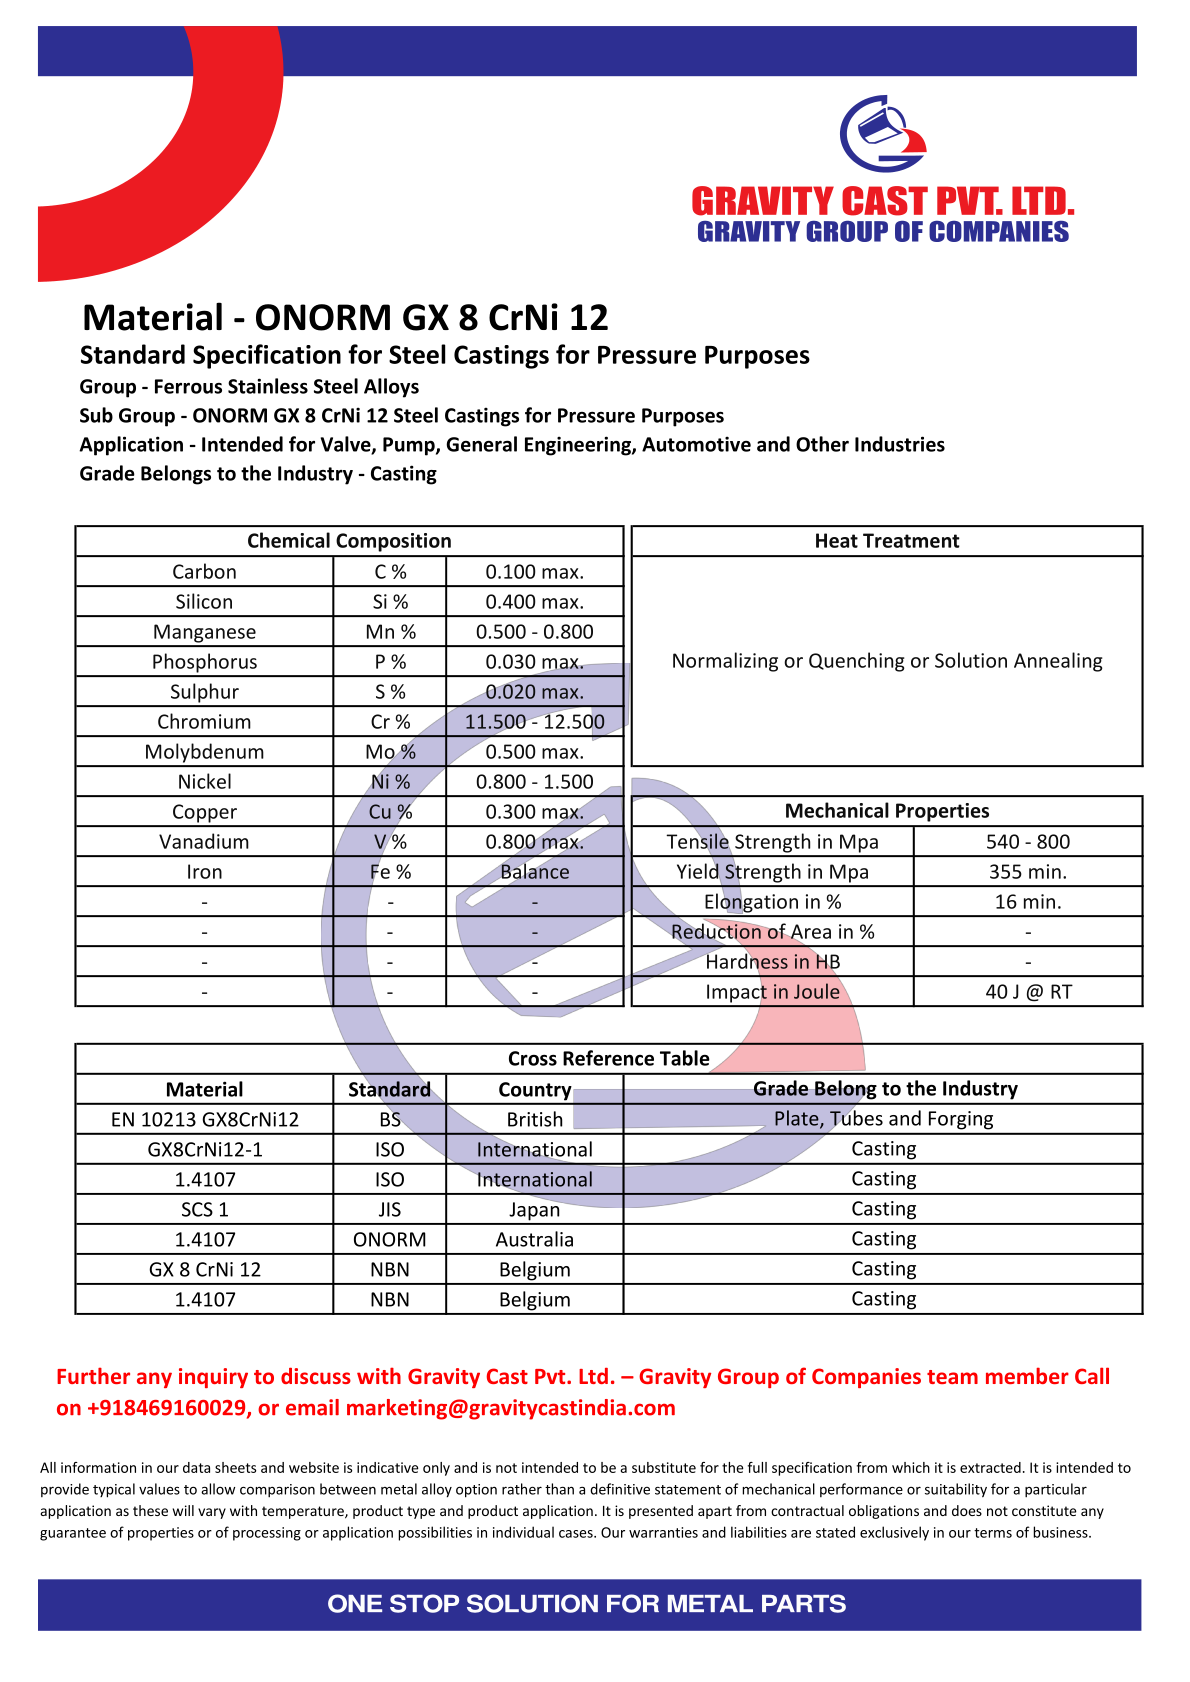 ONORM GX 8 CrNi 12.pdf